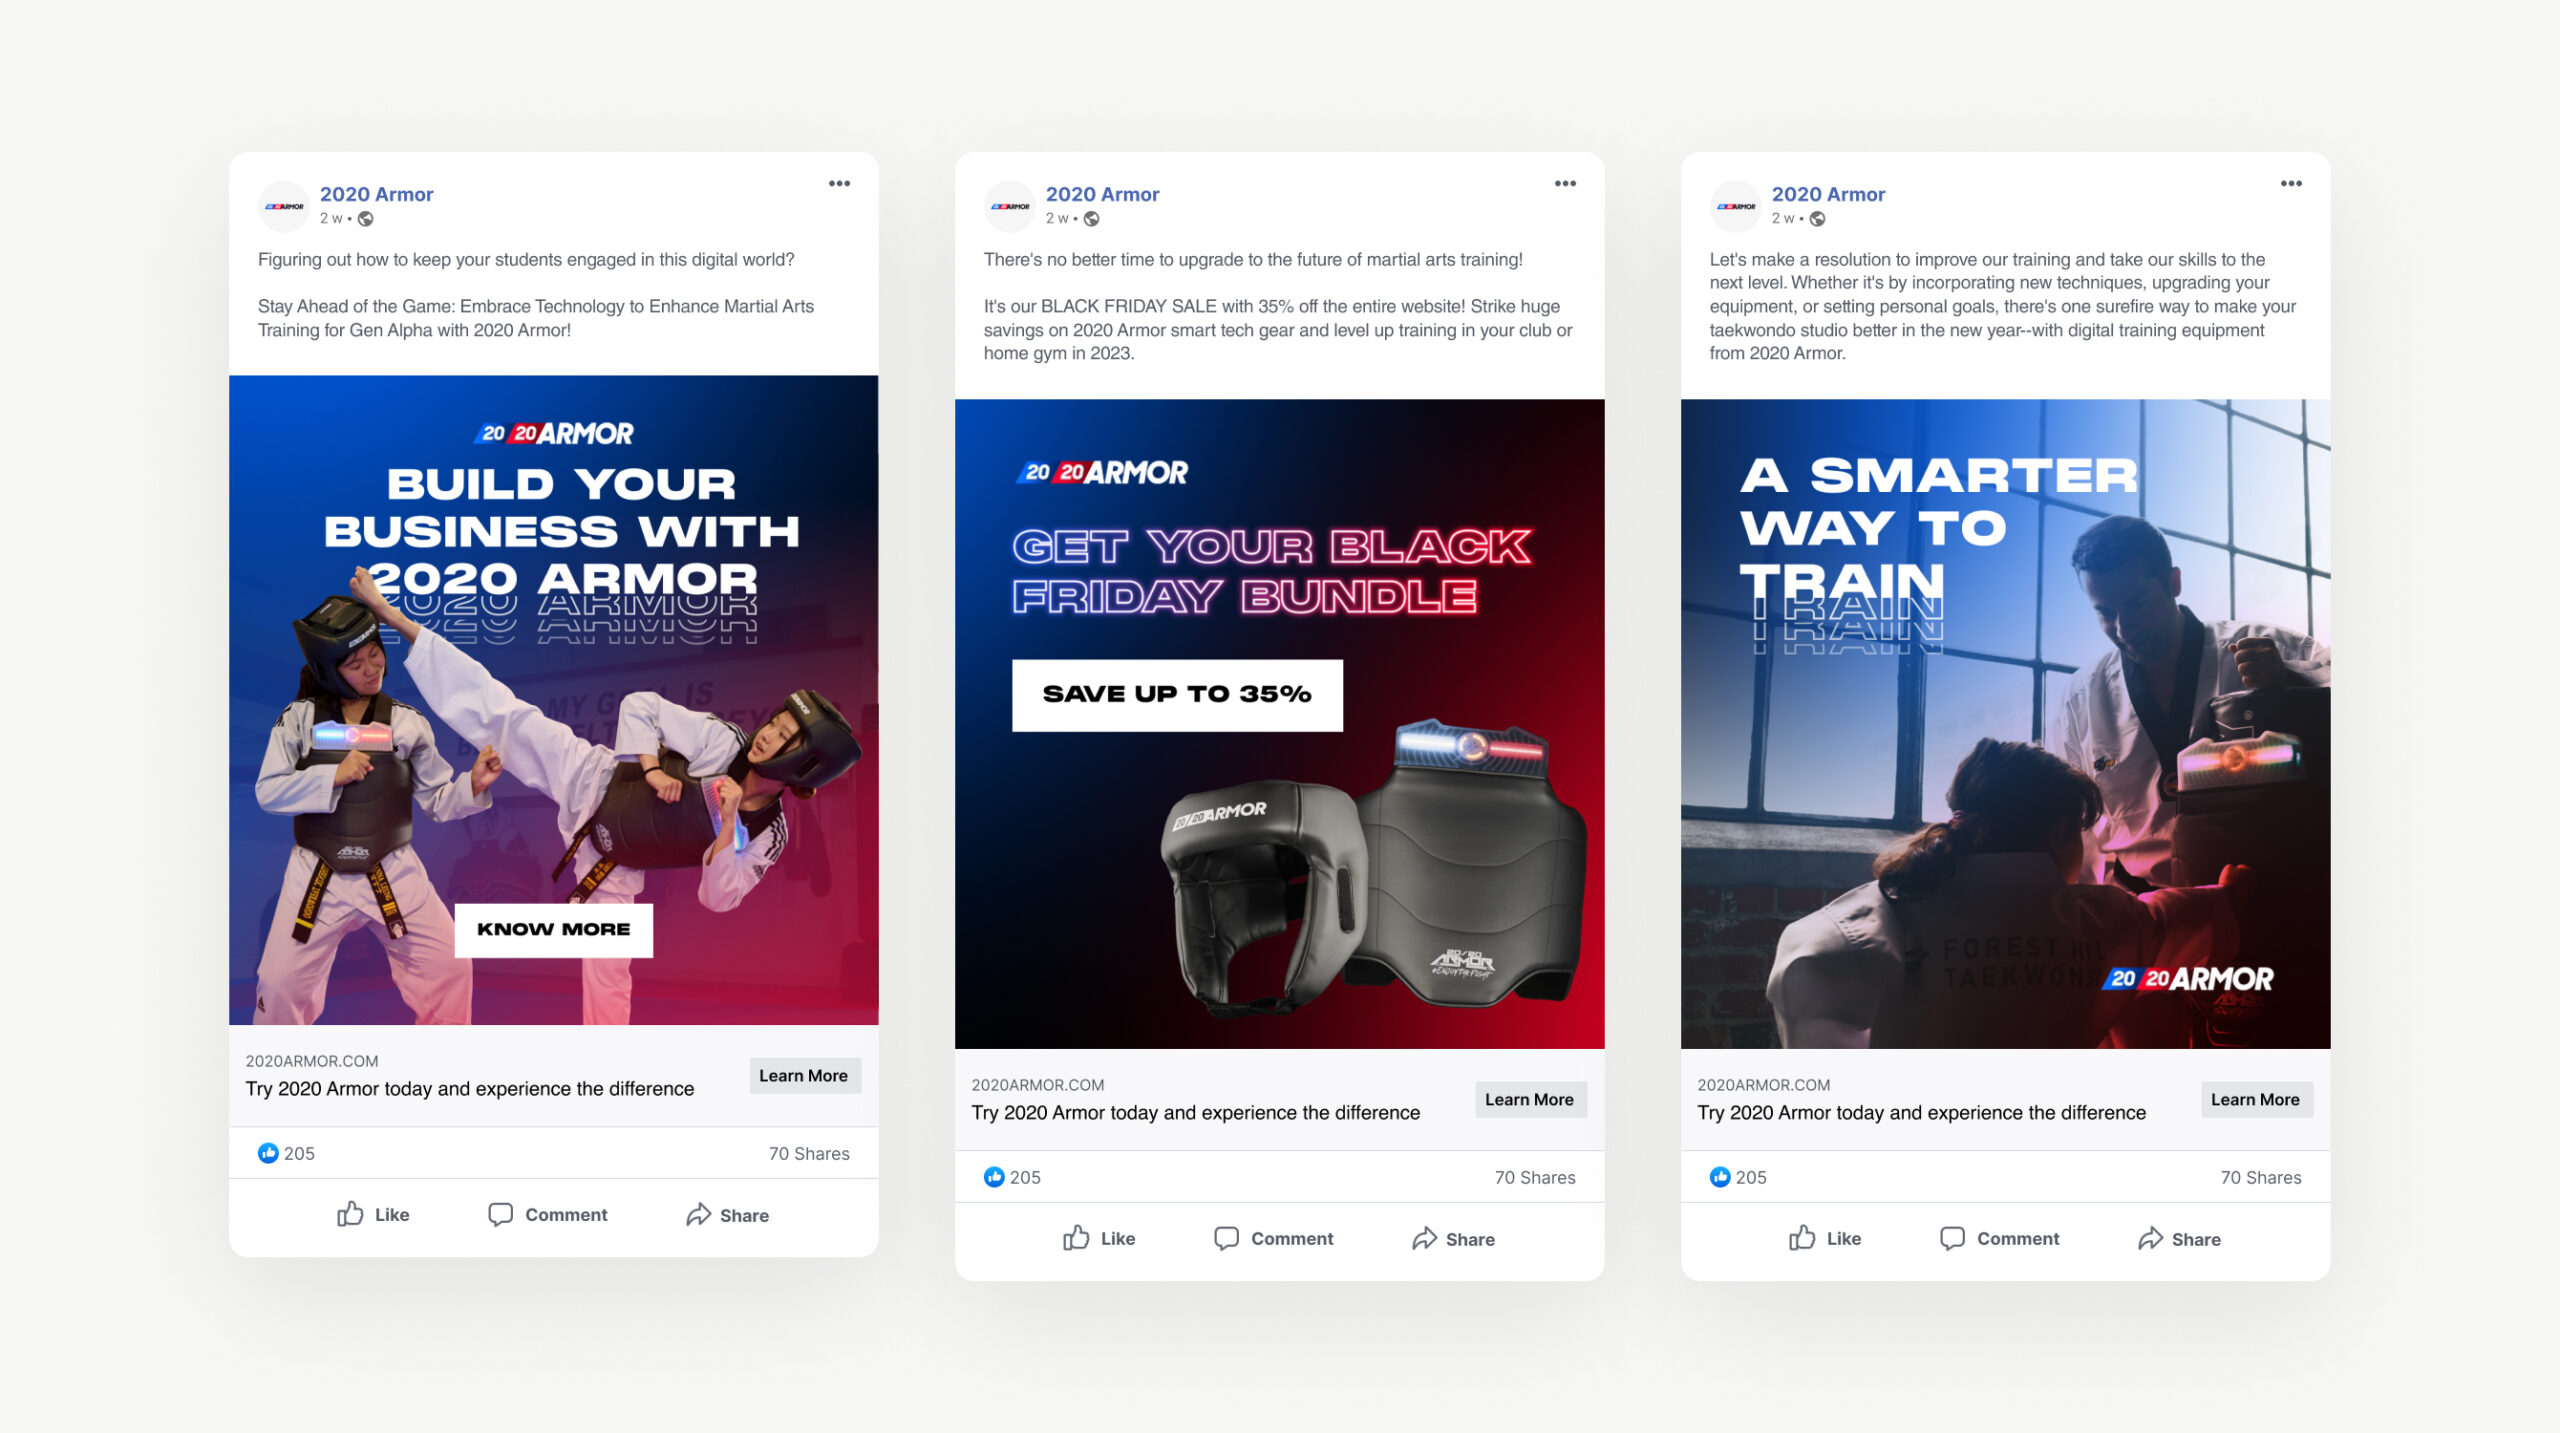 2020 Armor Social Media Paid Advertising Posts